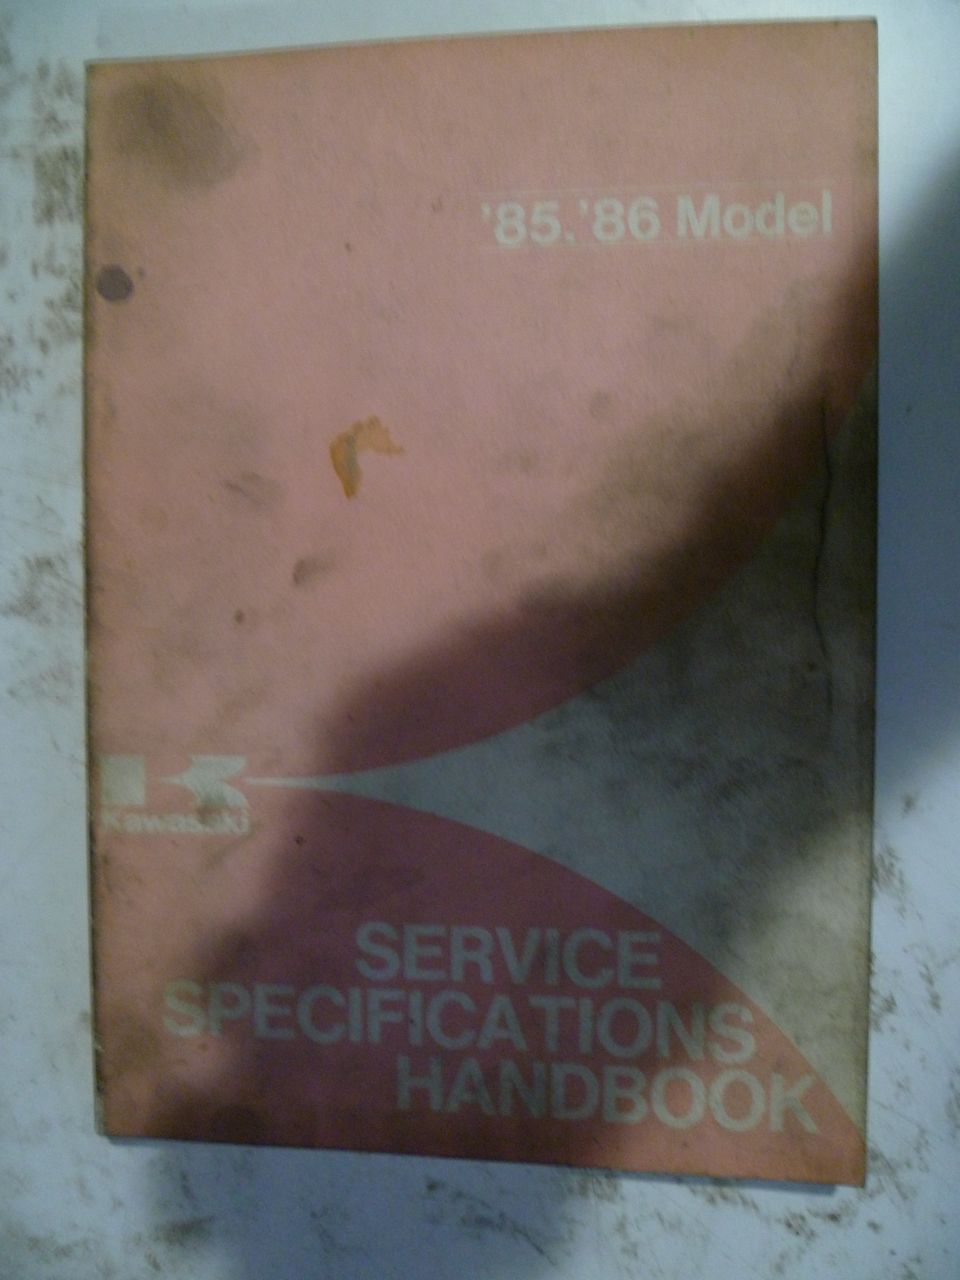 Kawasaki service specifications handbook 1985-1986